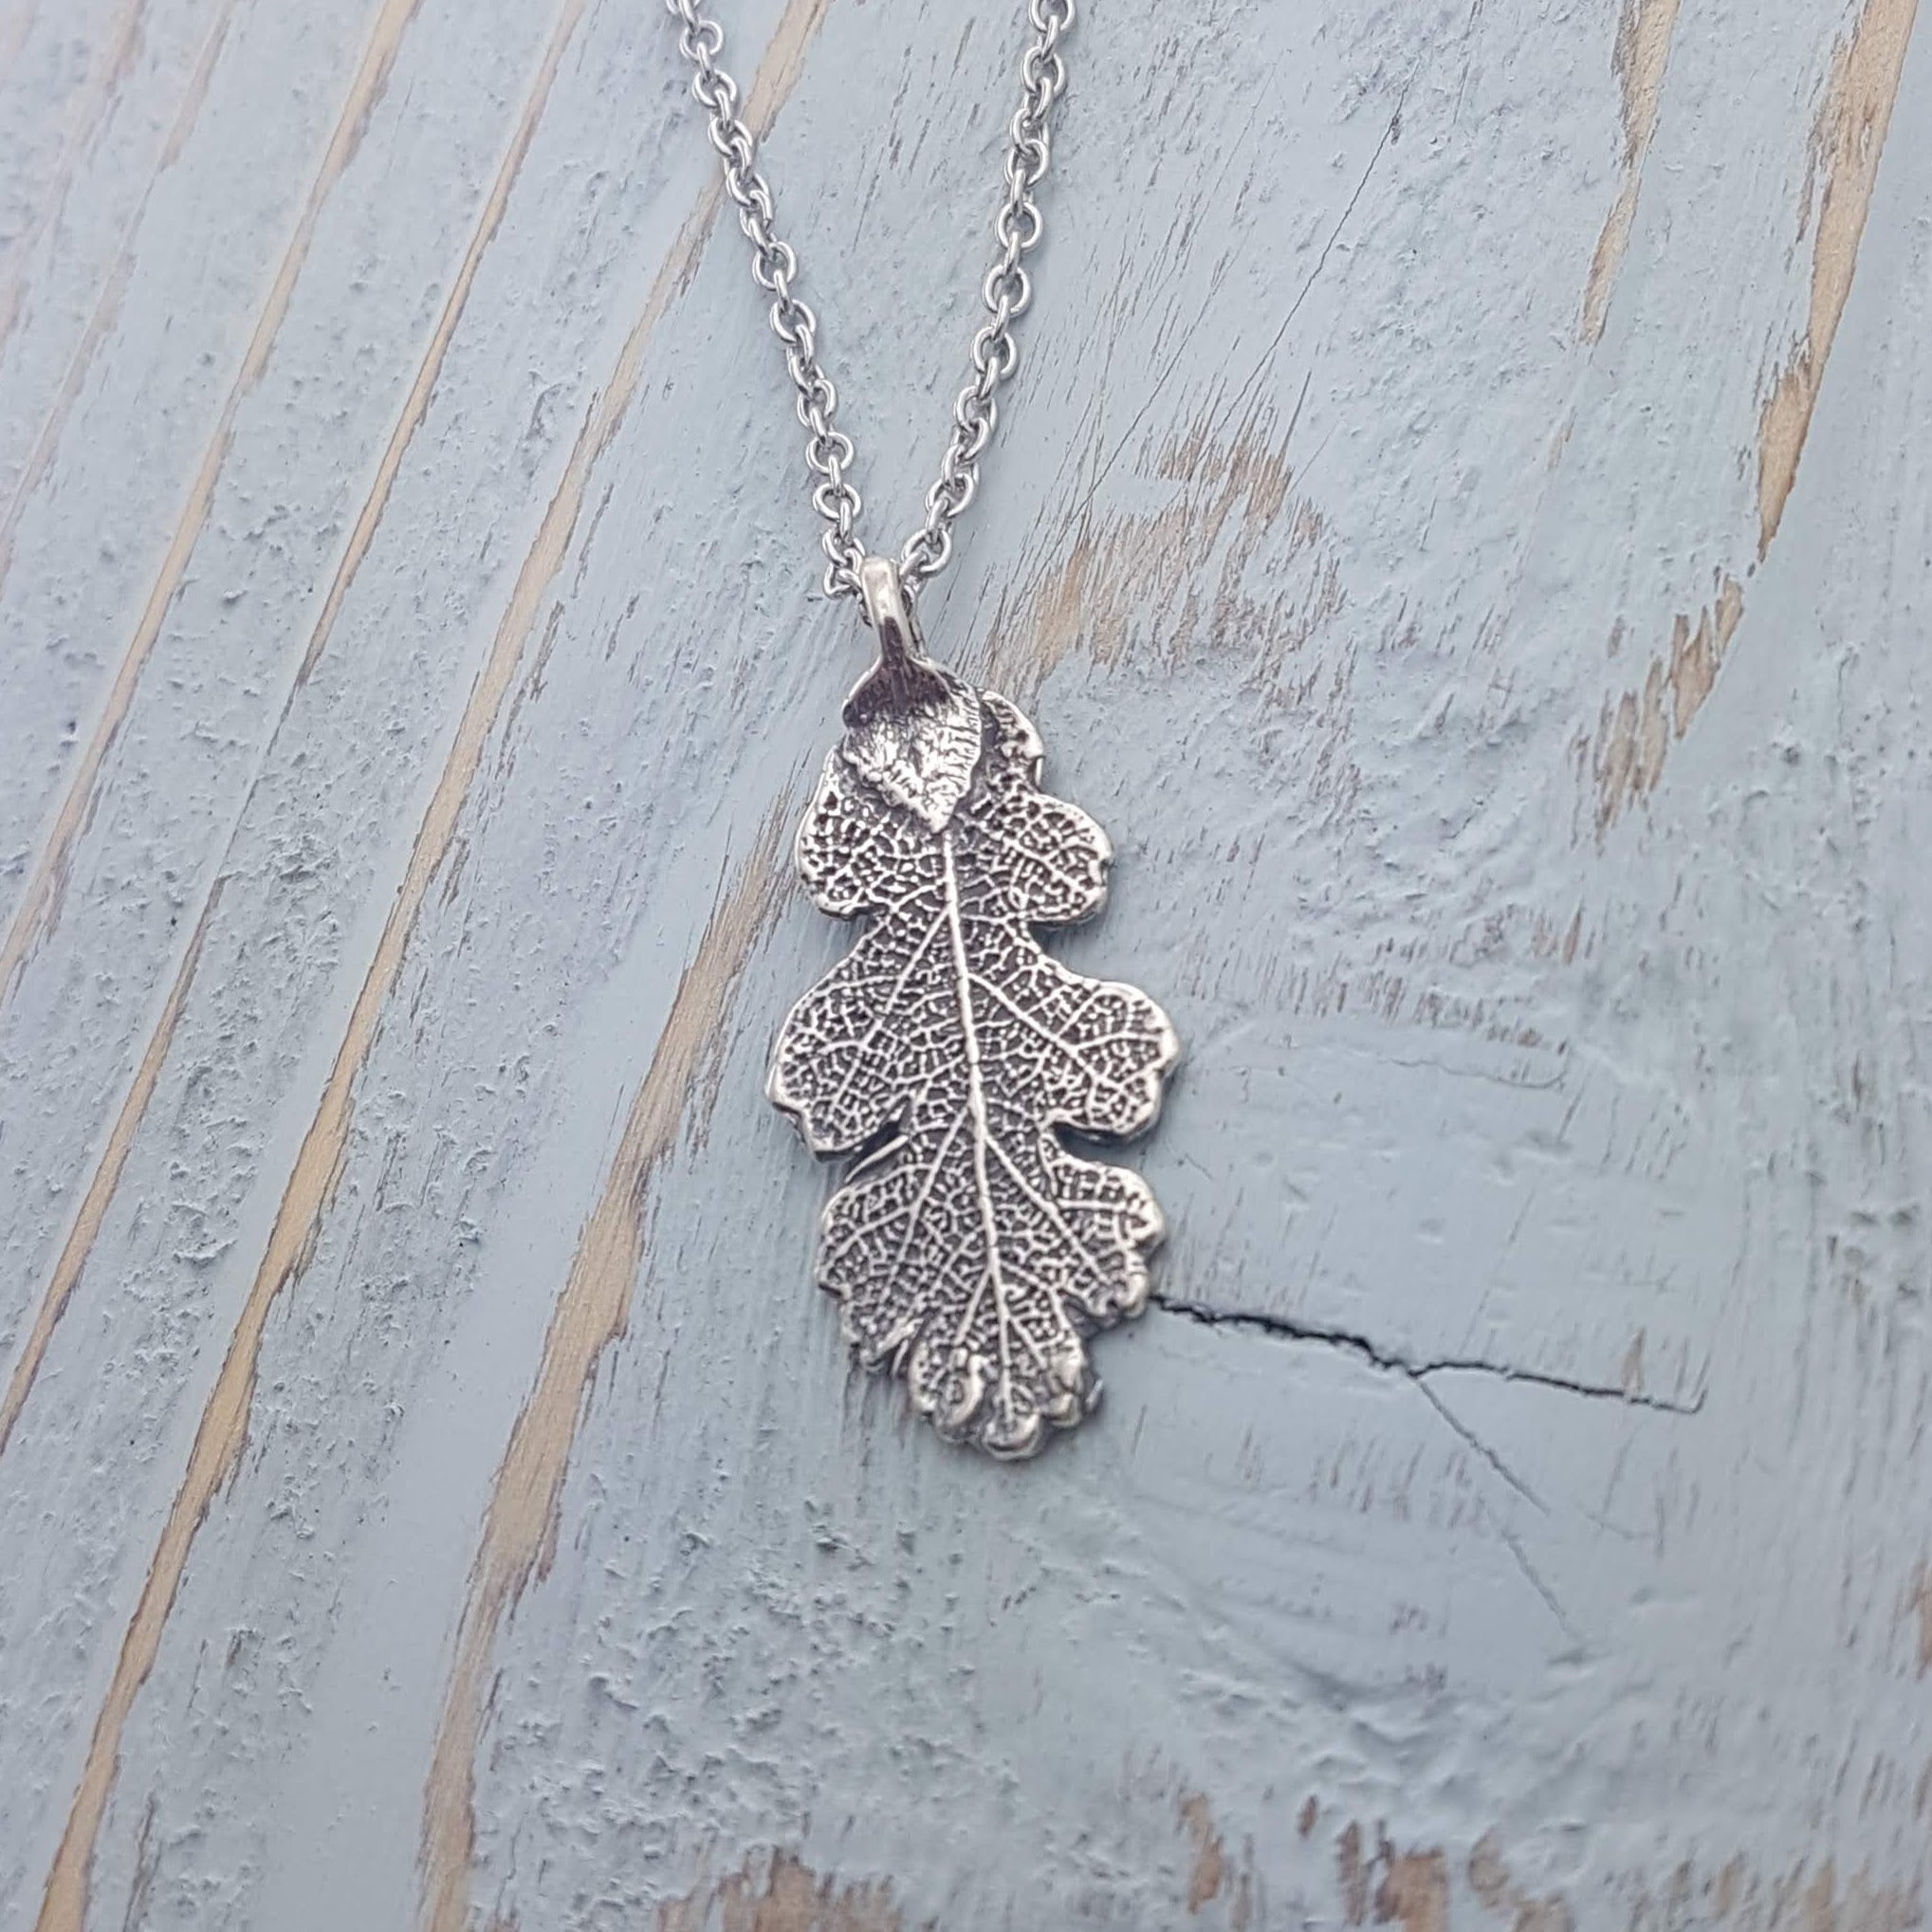 Oak Leaf Necklace - Gwen Delicious Jewelry Designs